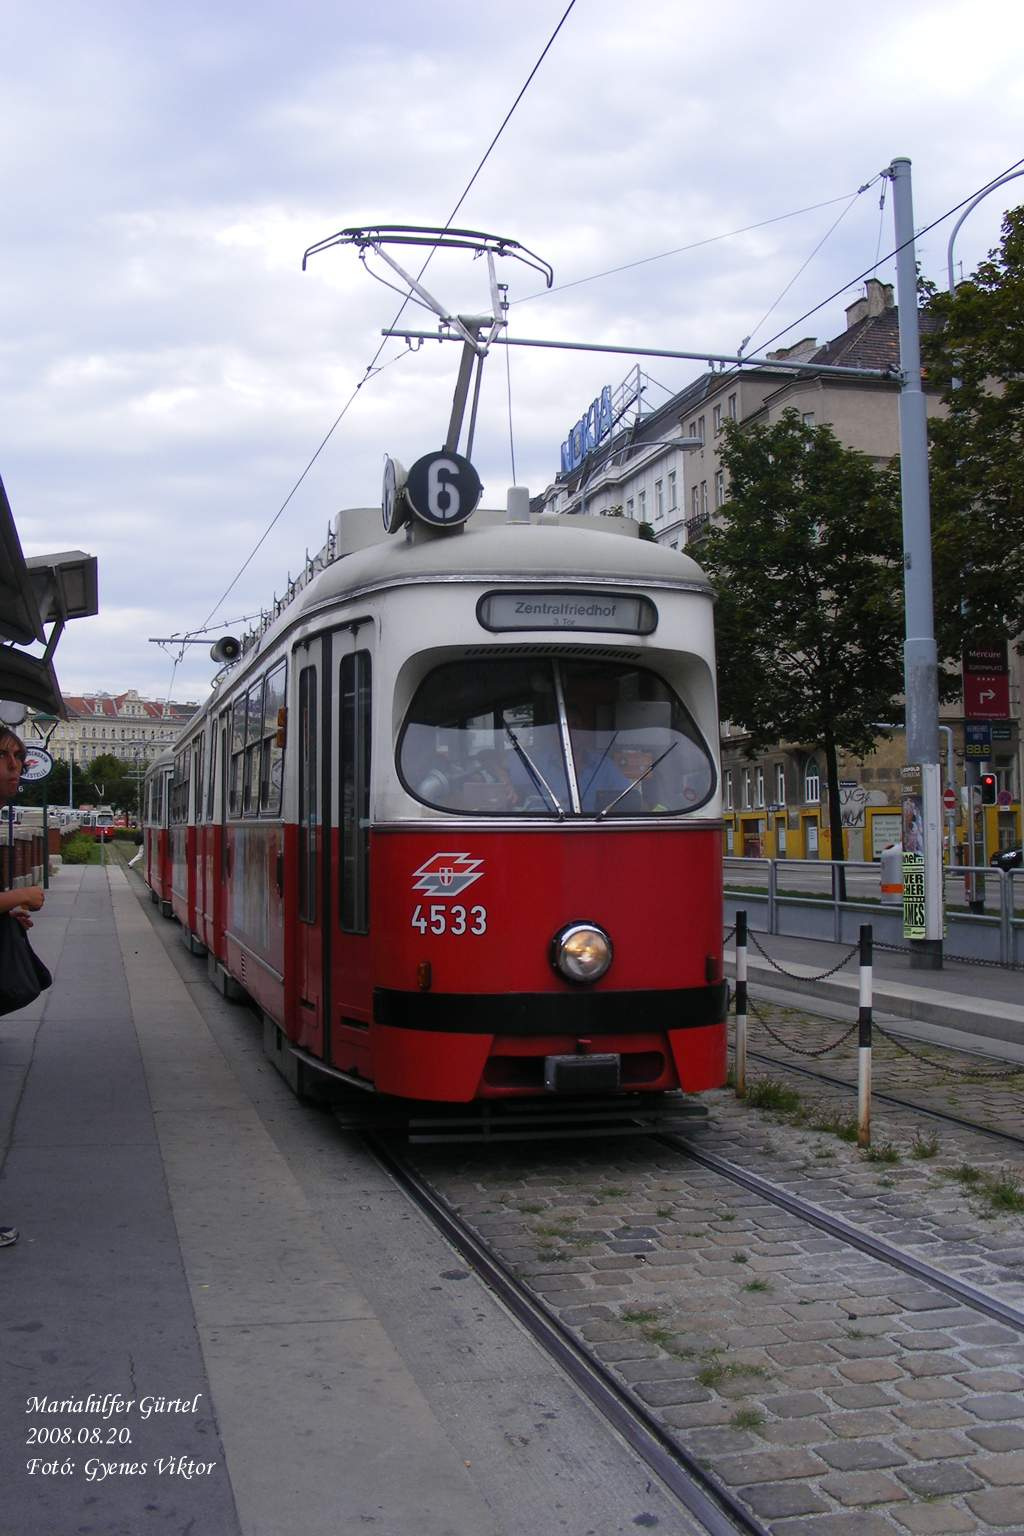 Bécsi villamos4533